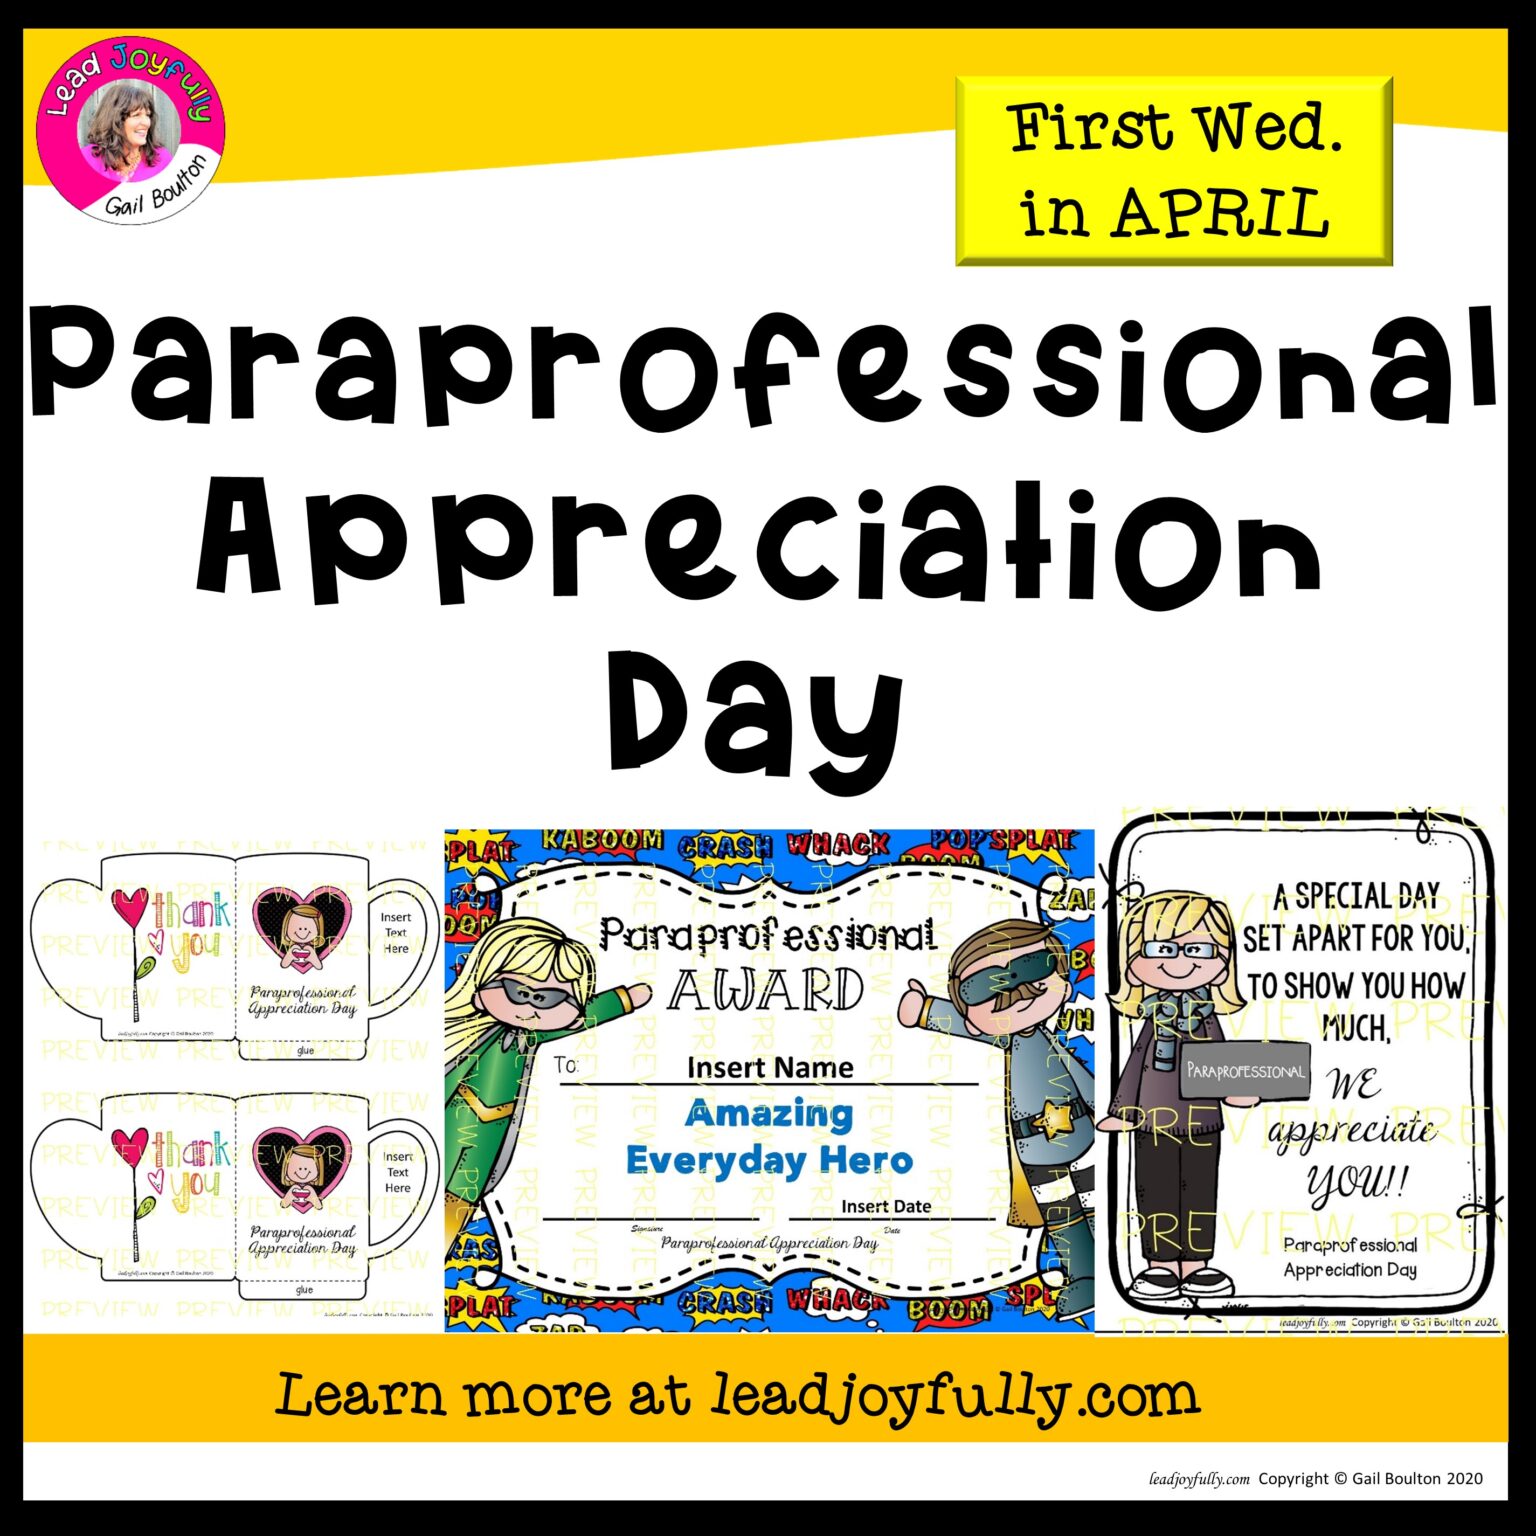 Paraprofessional Appreciation Day April 2nd Lead Joyfully